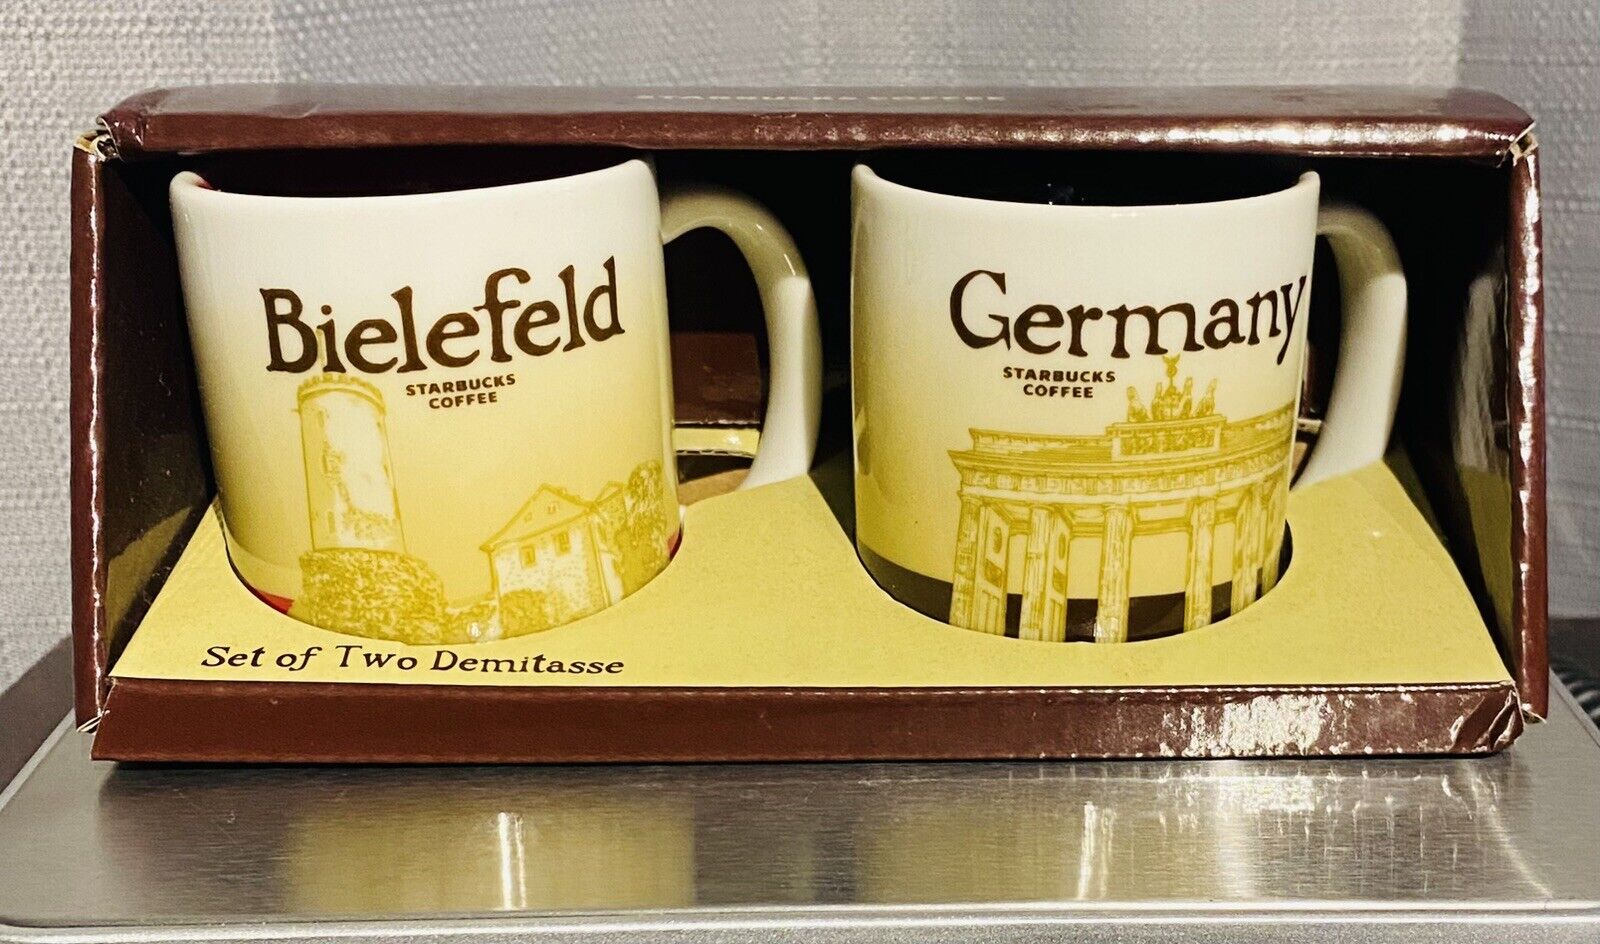 STARBUCKS COFFEE Bielefeld/Germany 3 oz DEMITASSE Mug Set - Brand New In Package